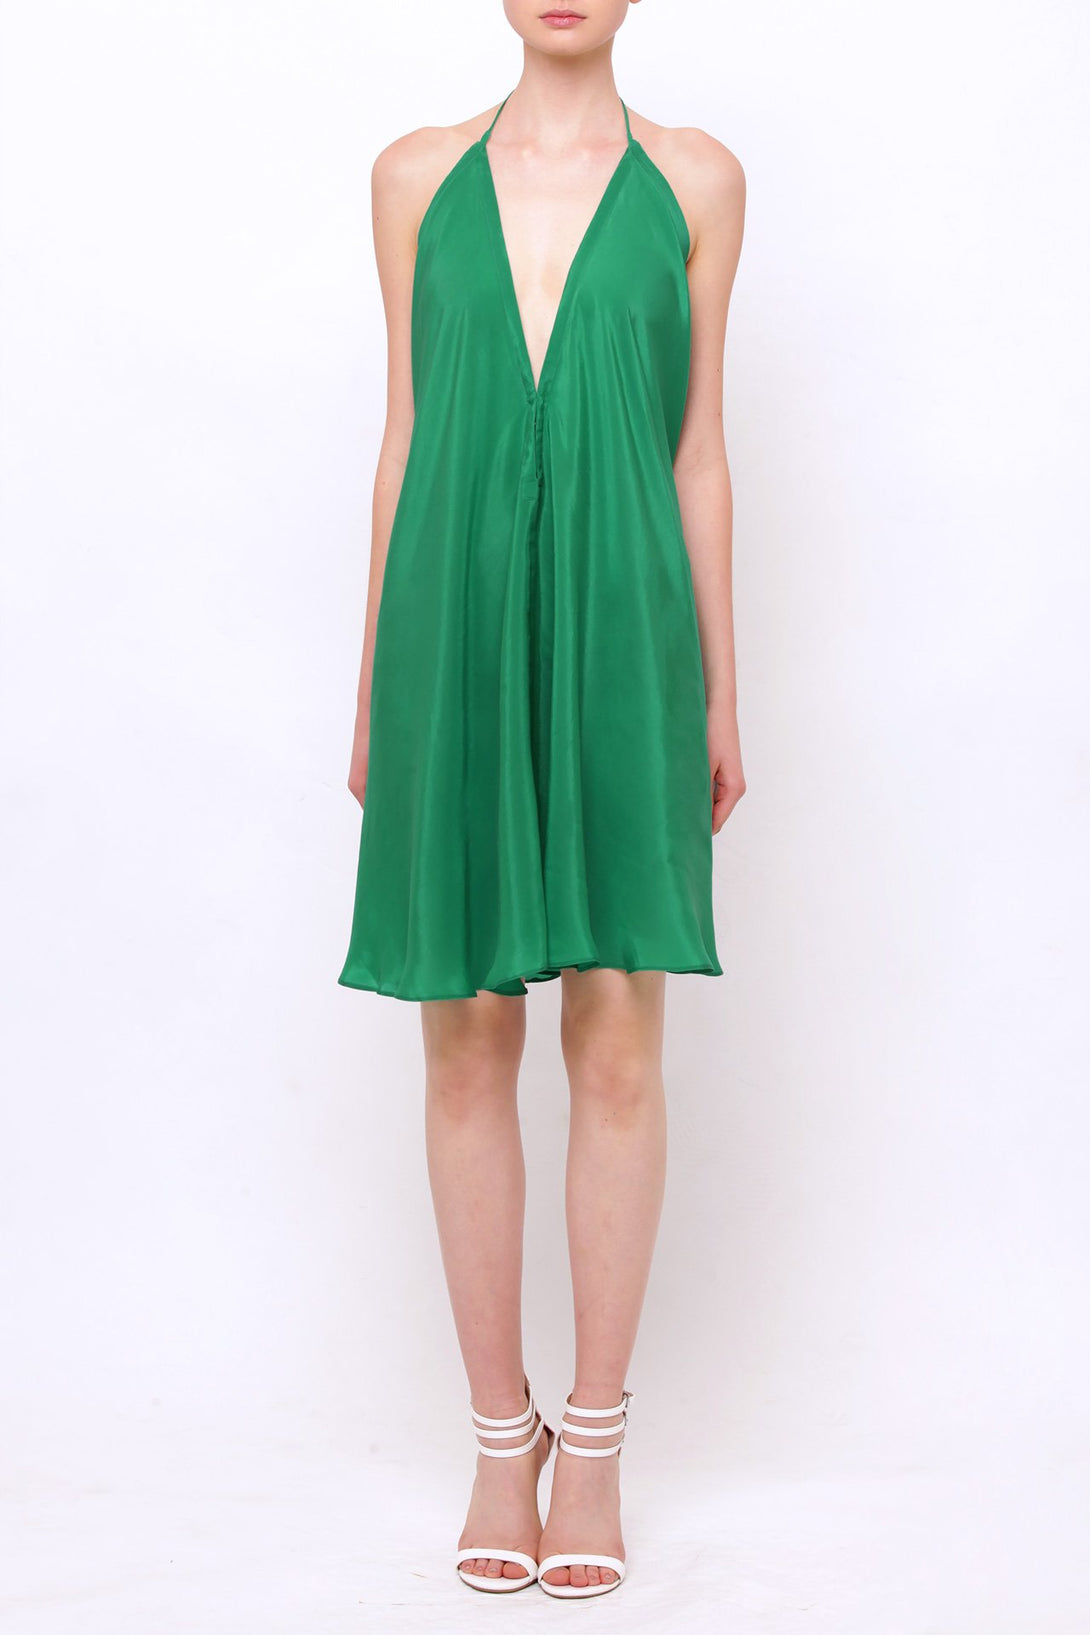 dark green mini dress, short frock for women party wear, Shahida Parides, sleeveless short dress,